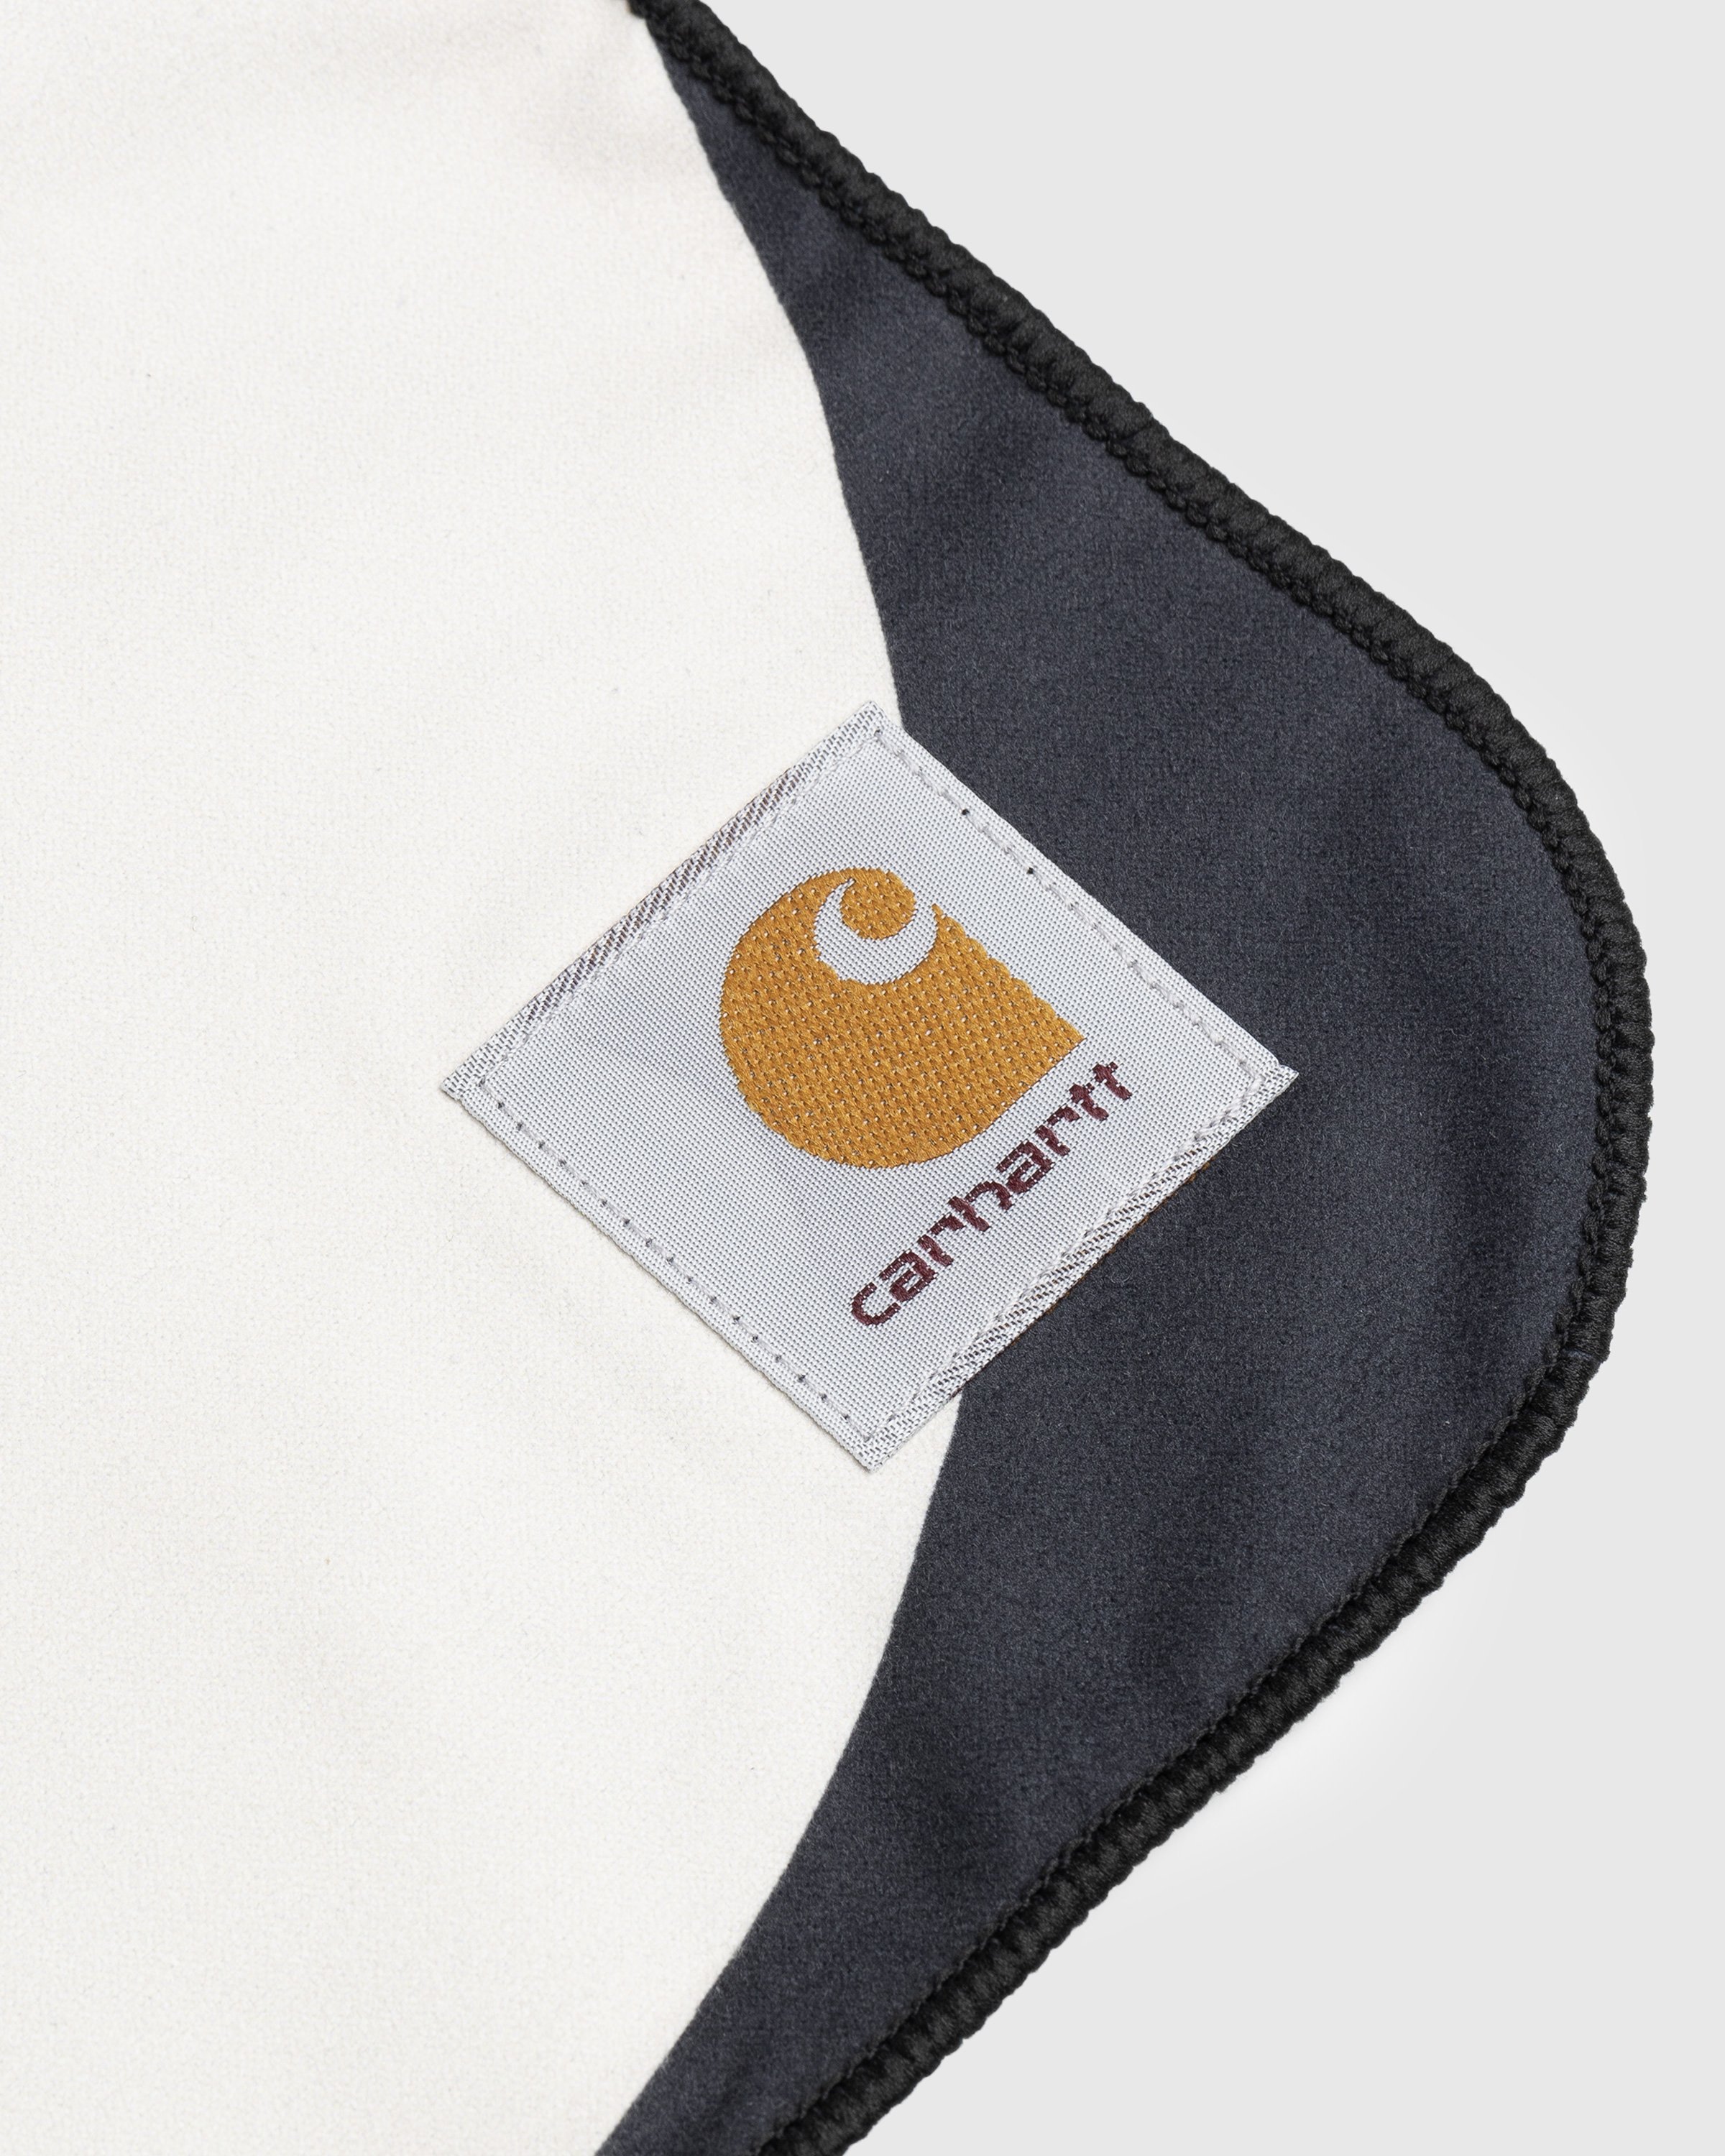 Carhartt WIP - Tamas Packable Towel Multi - Lifestyle - Multi - Image 4